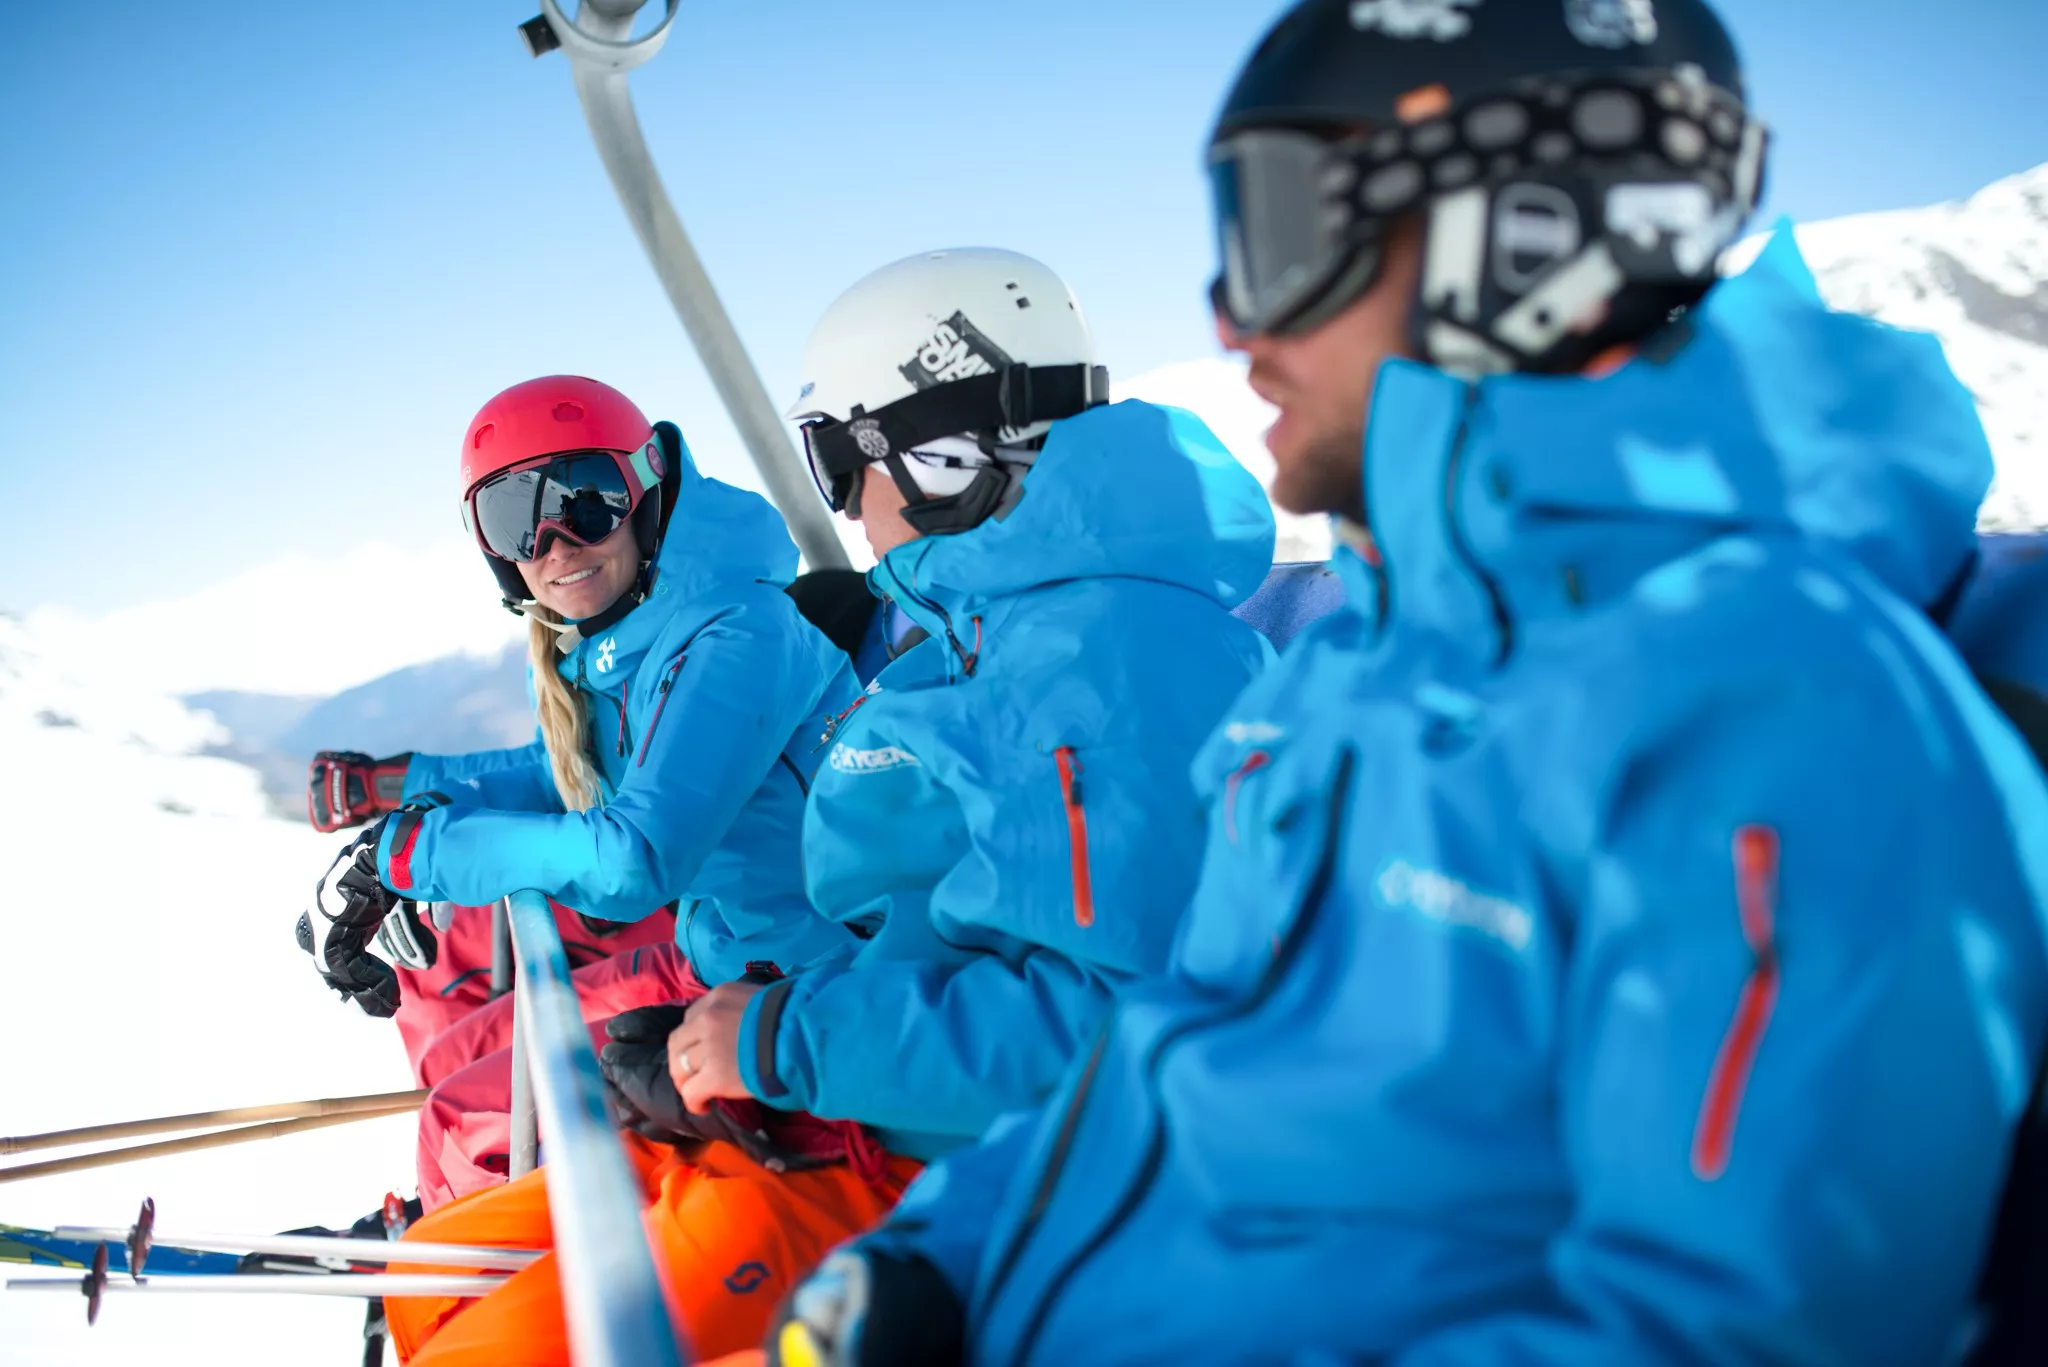 Supreme Ski School in France, Europe | Snowboarding,Skiing - Rated 1